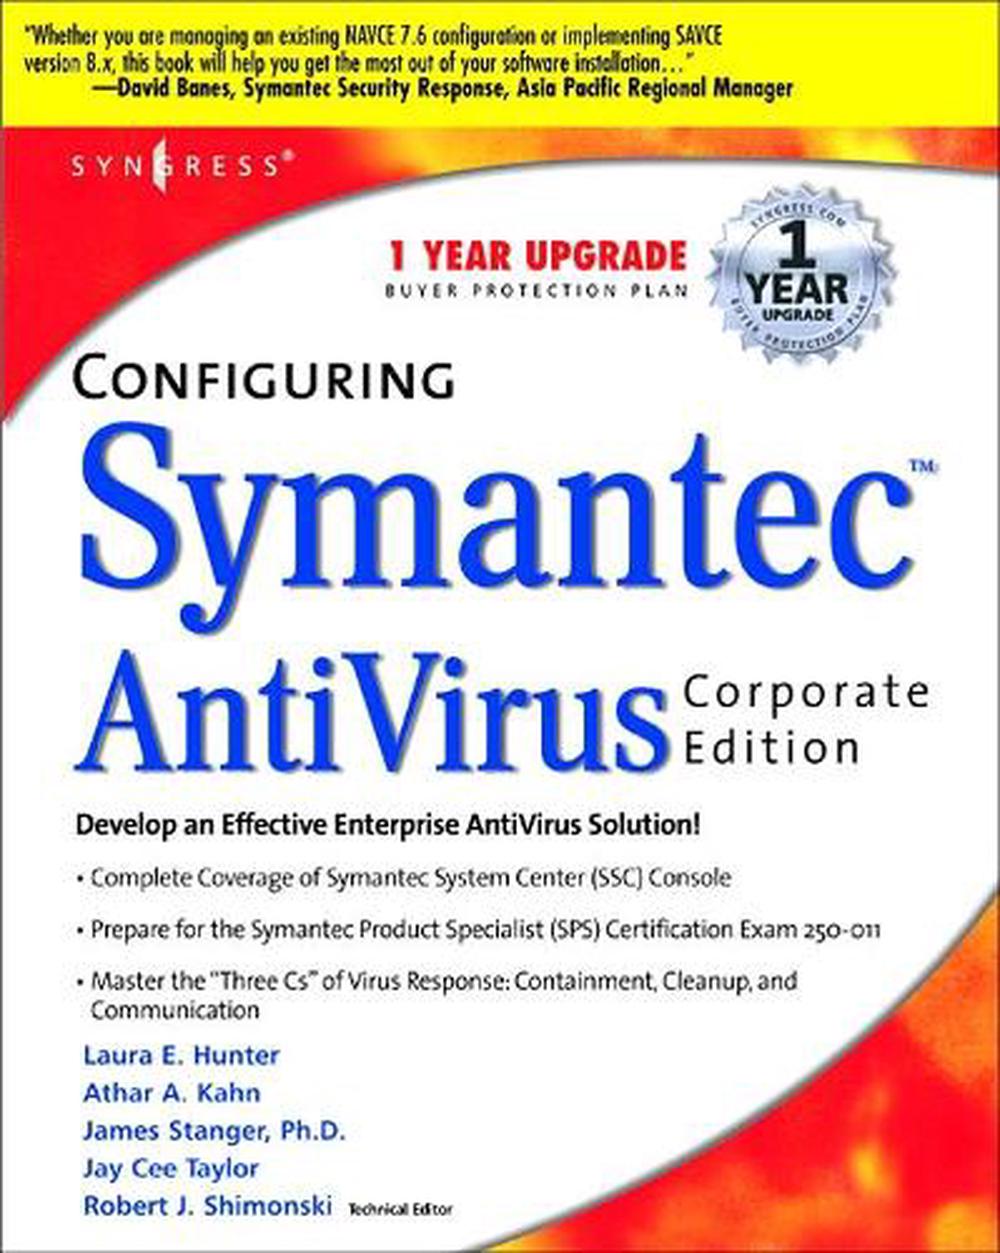 symantec antivirus corporate edition